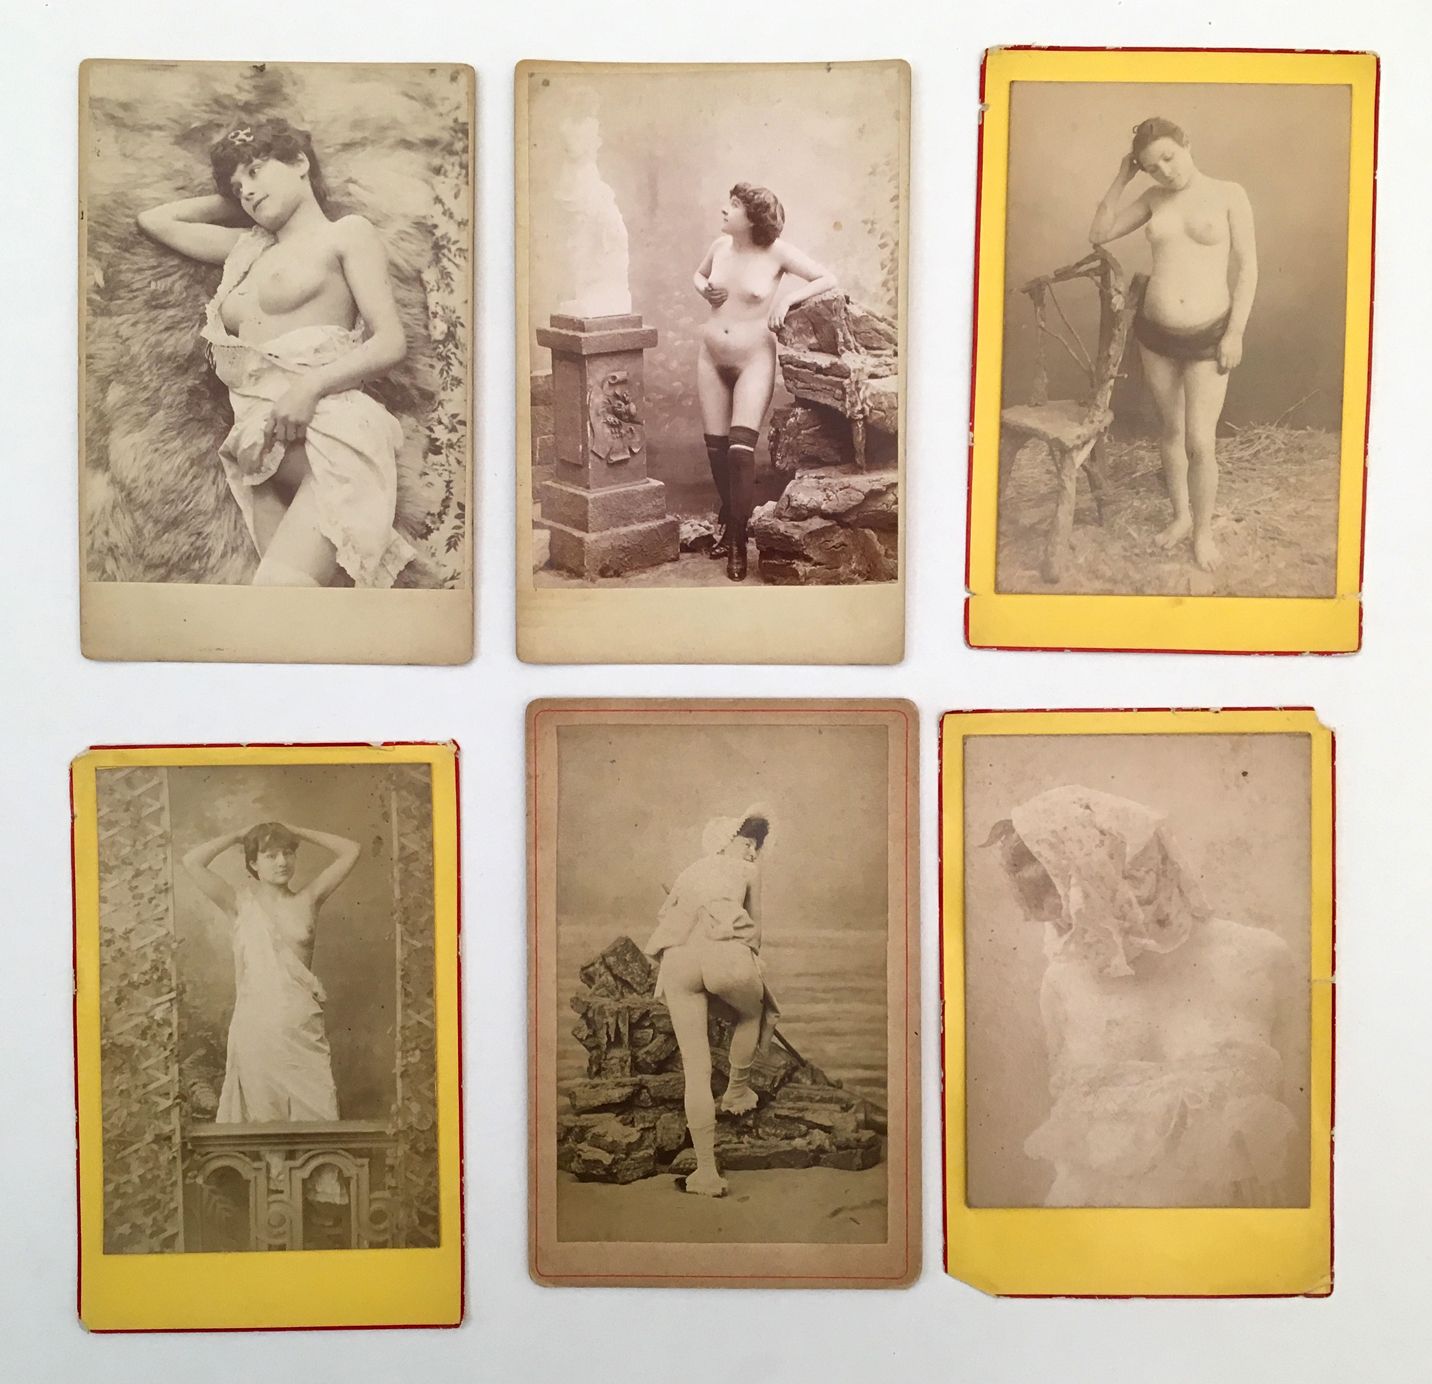 Null [身份不明的摄影师］女性裸体研究，约 1900 年。6 幅银质老照片裱在卡片上，卡片尺寸为 11 x 16 厘米。